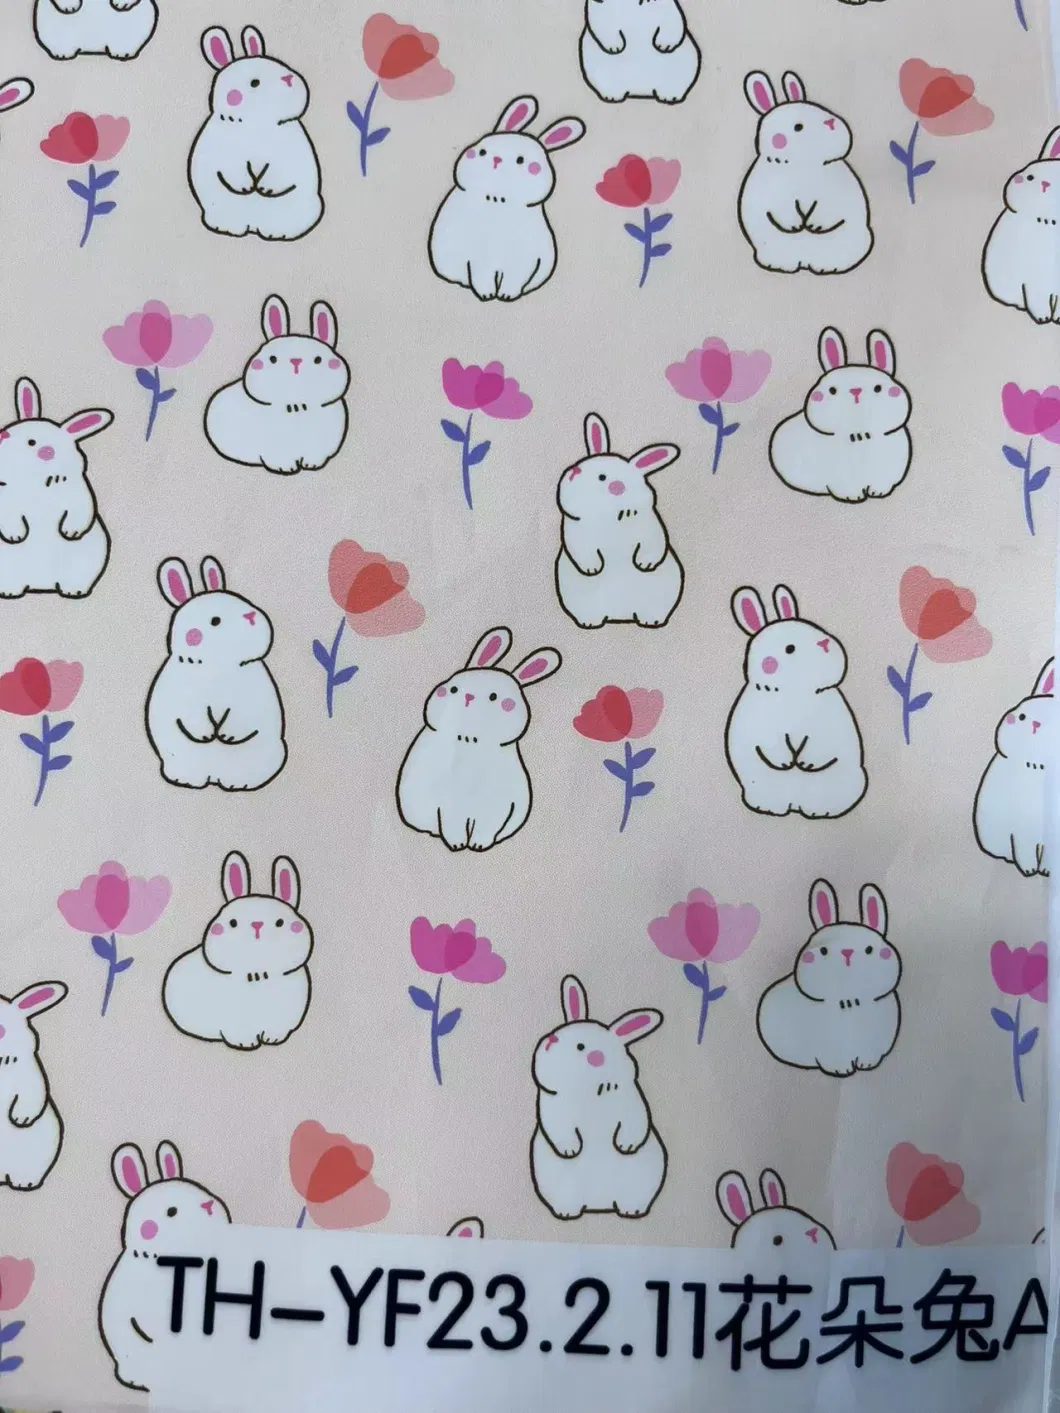 The Flower Patterns Rabbits Digital Printed Polyester Taffta Fabric